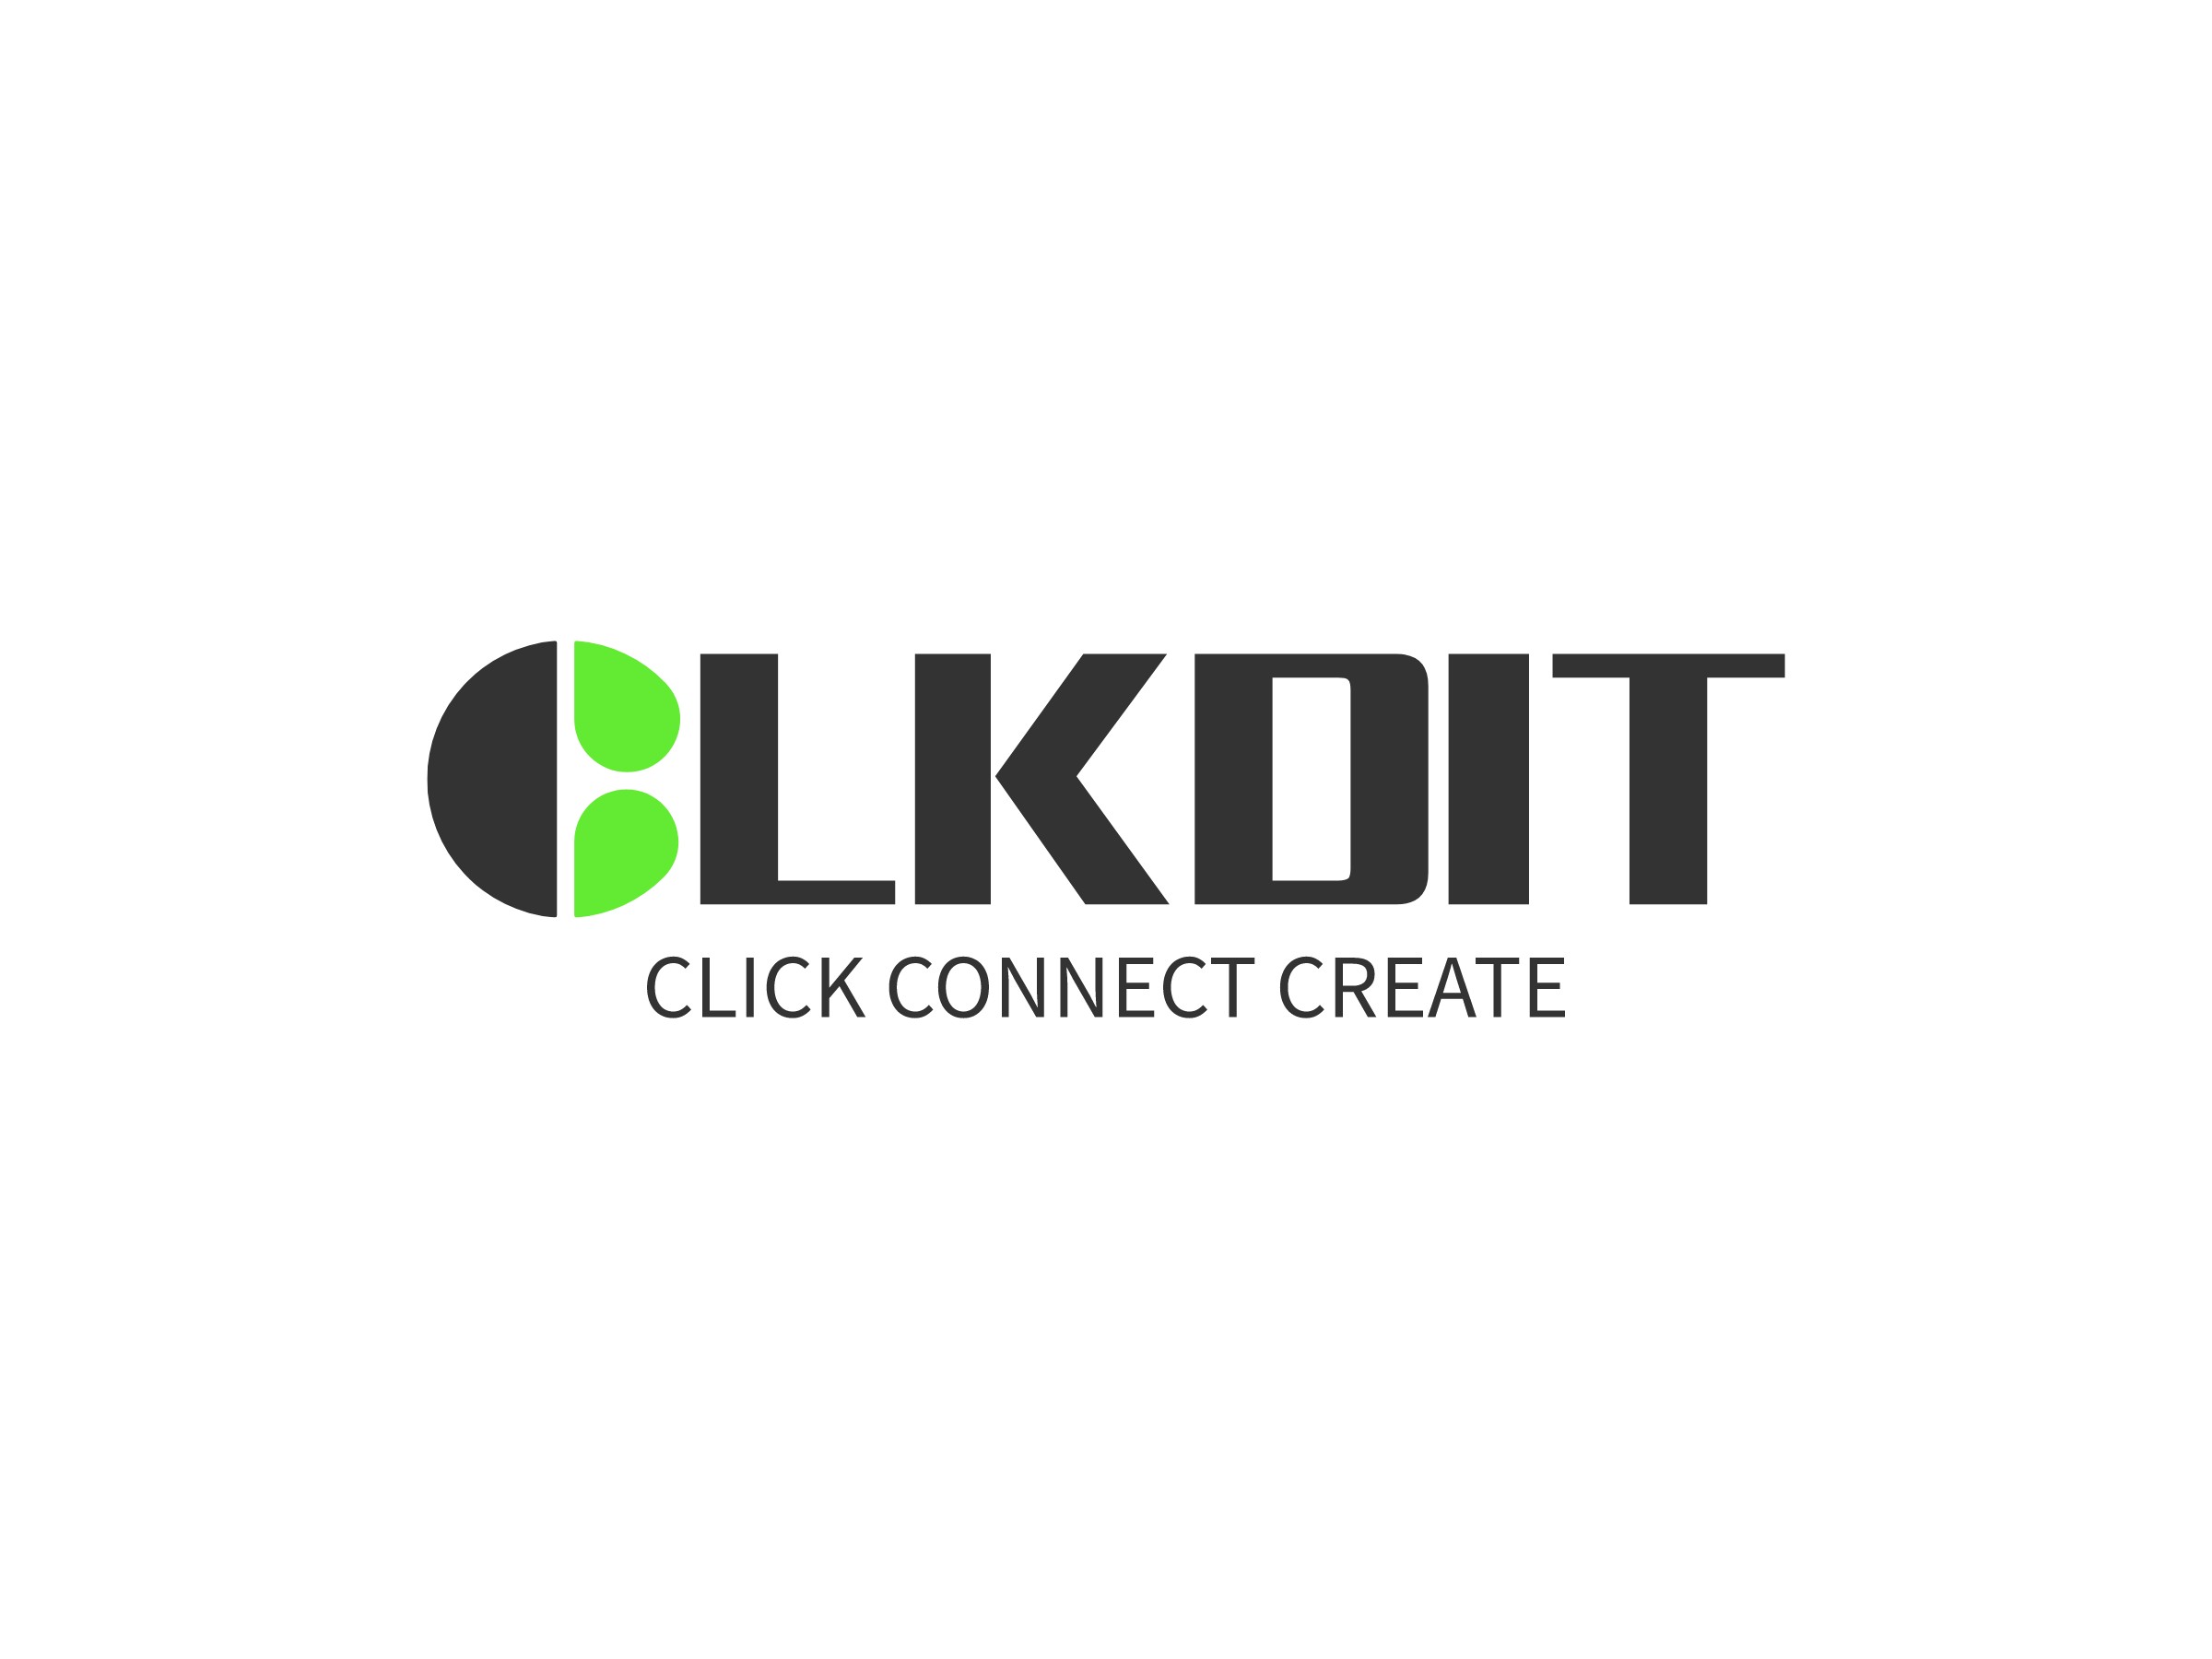 CLKDIT - CLICK CONNECT CREATE